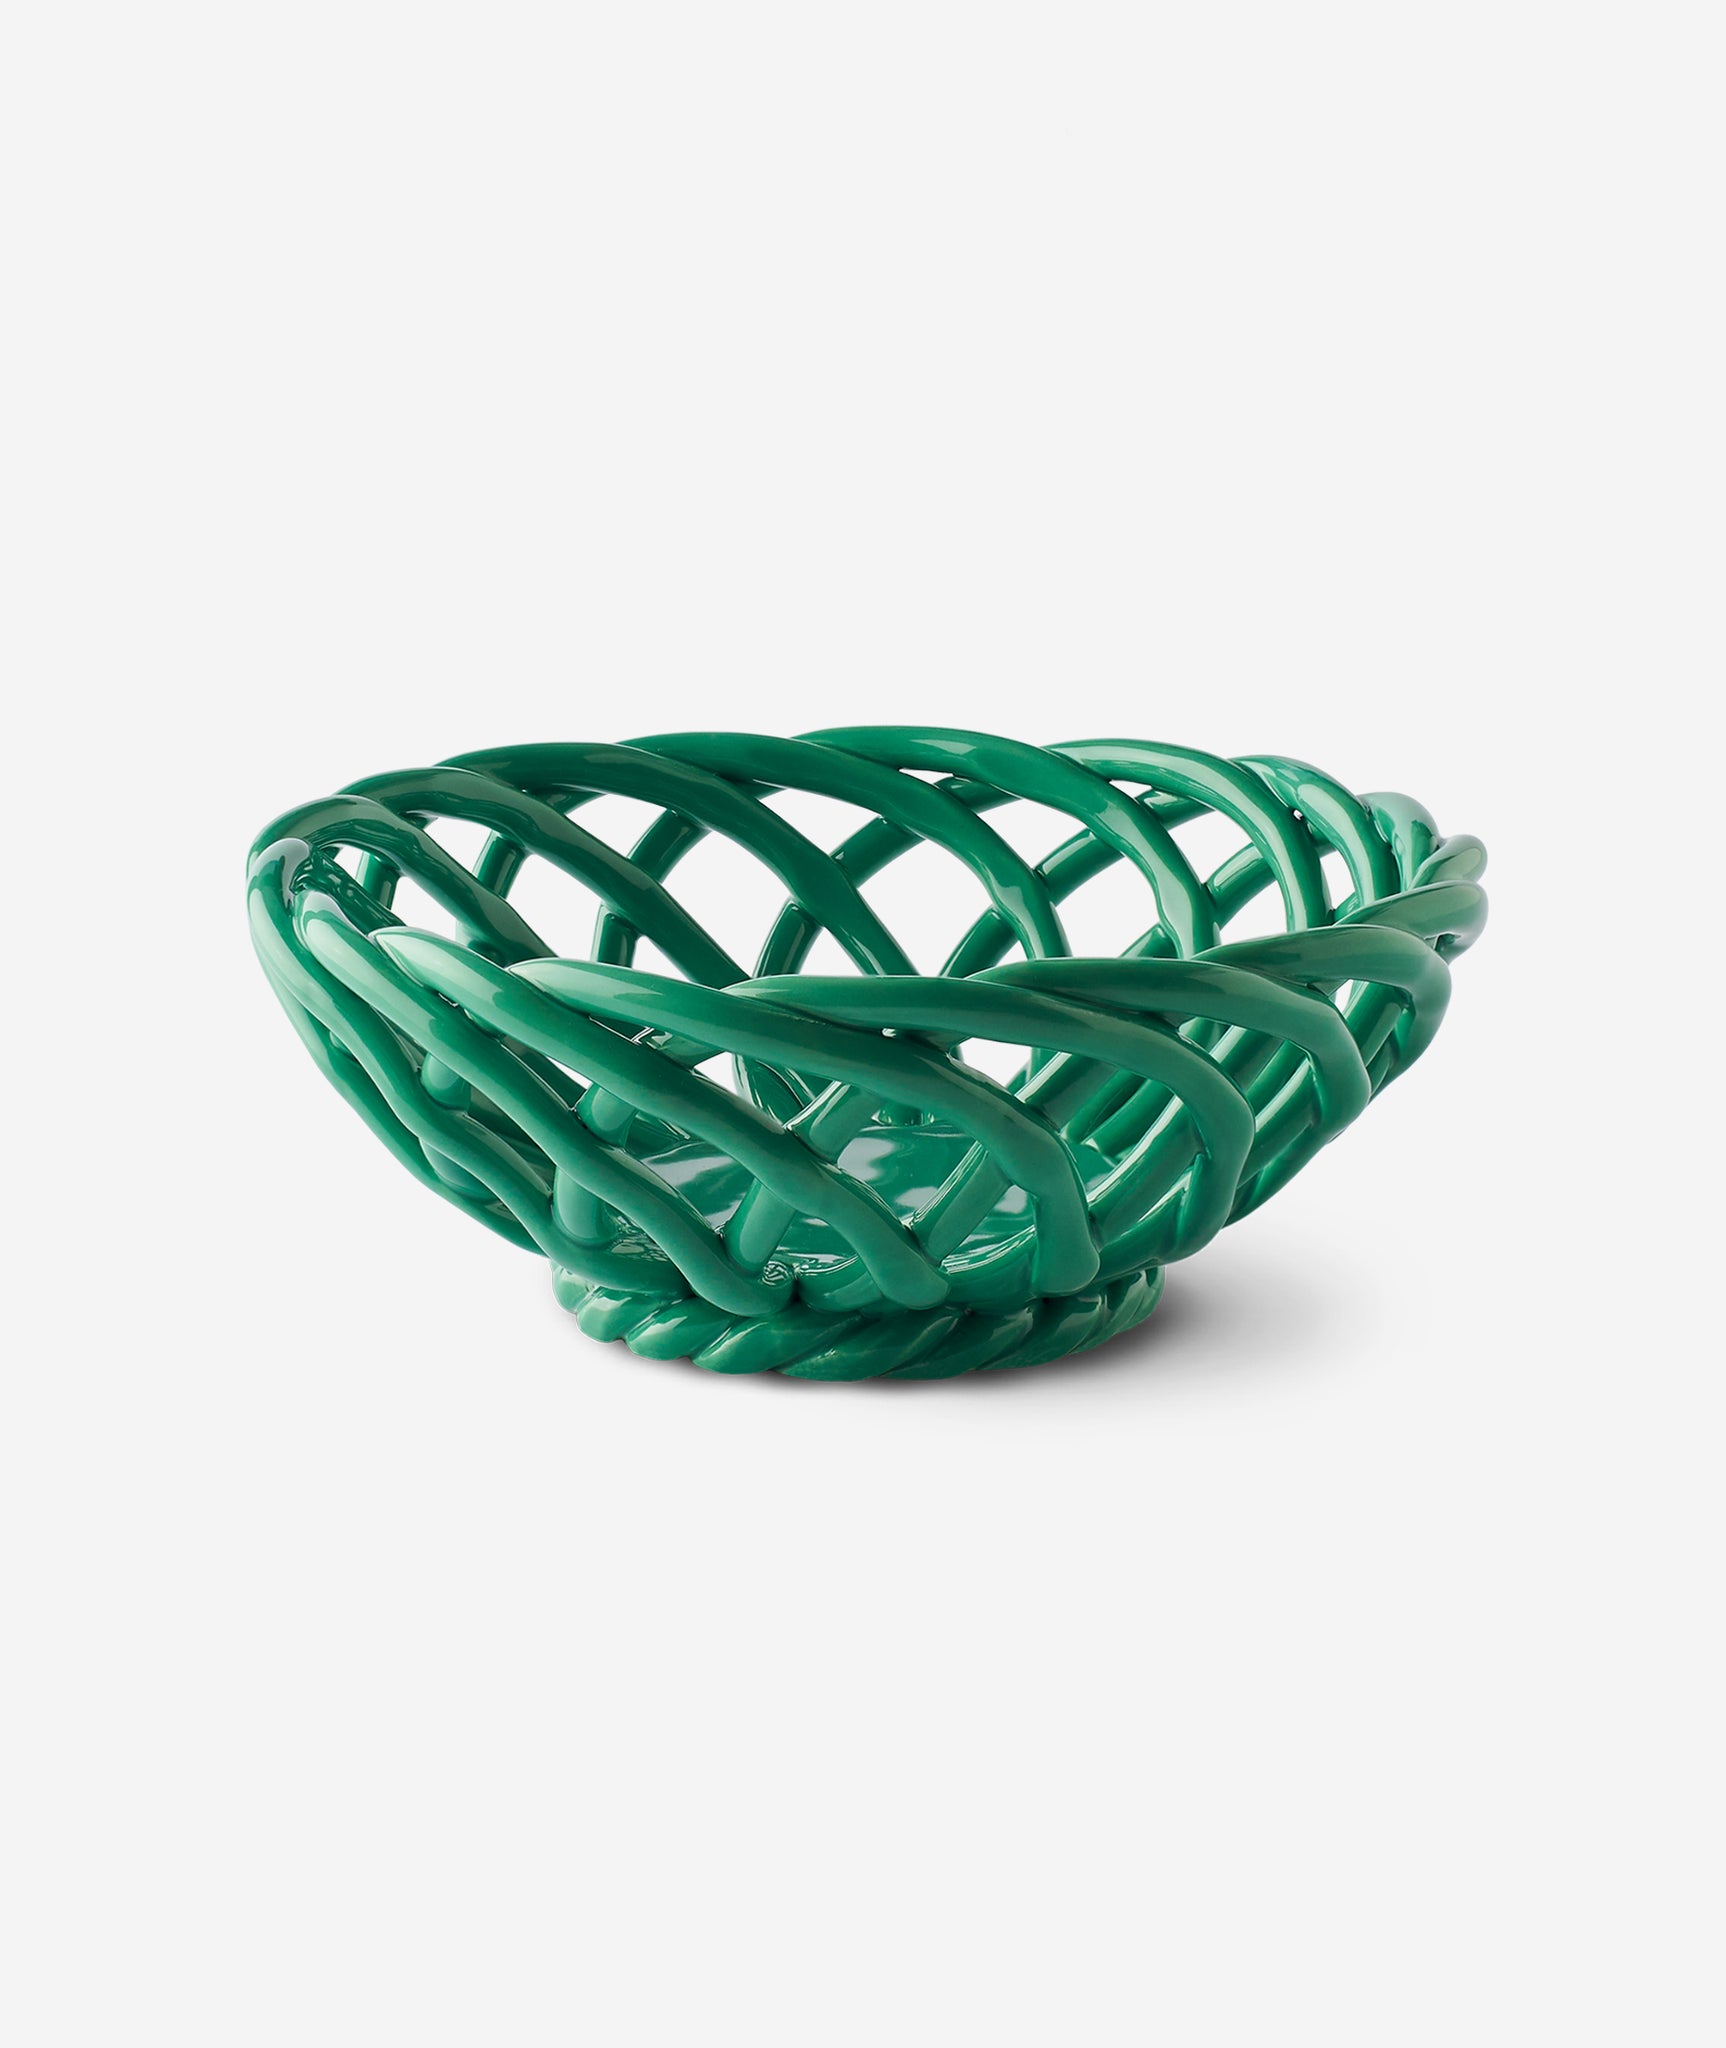 Sicilia Ceramic Basket Bowl - More Options